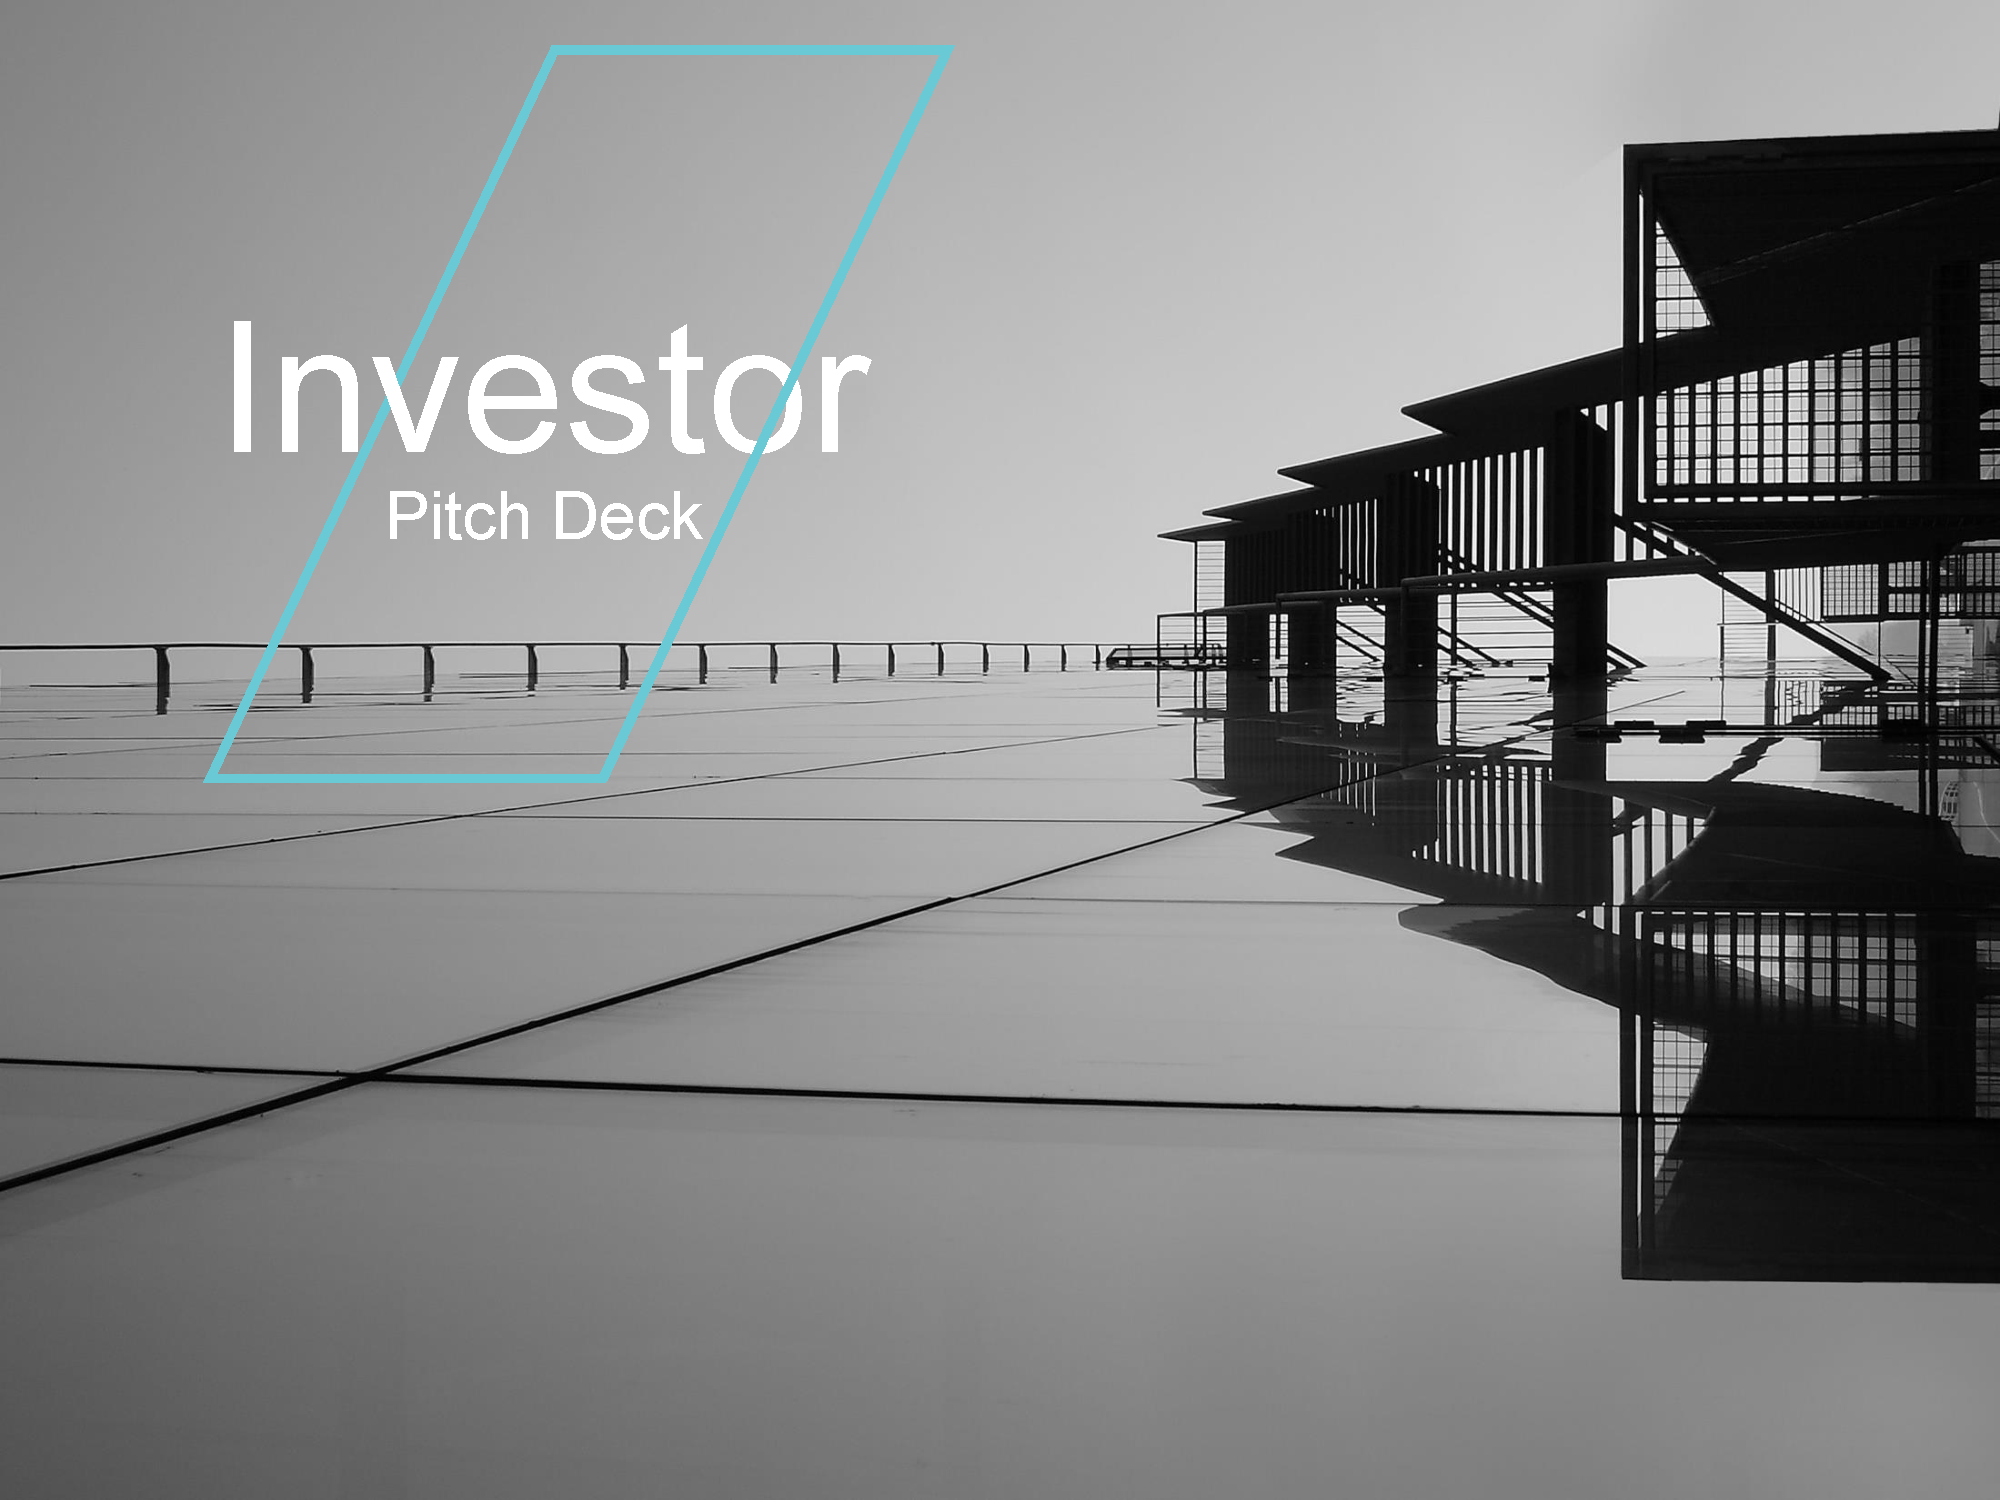 Investor Pitch Deck